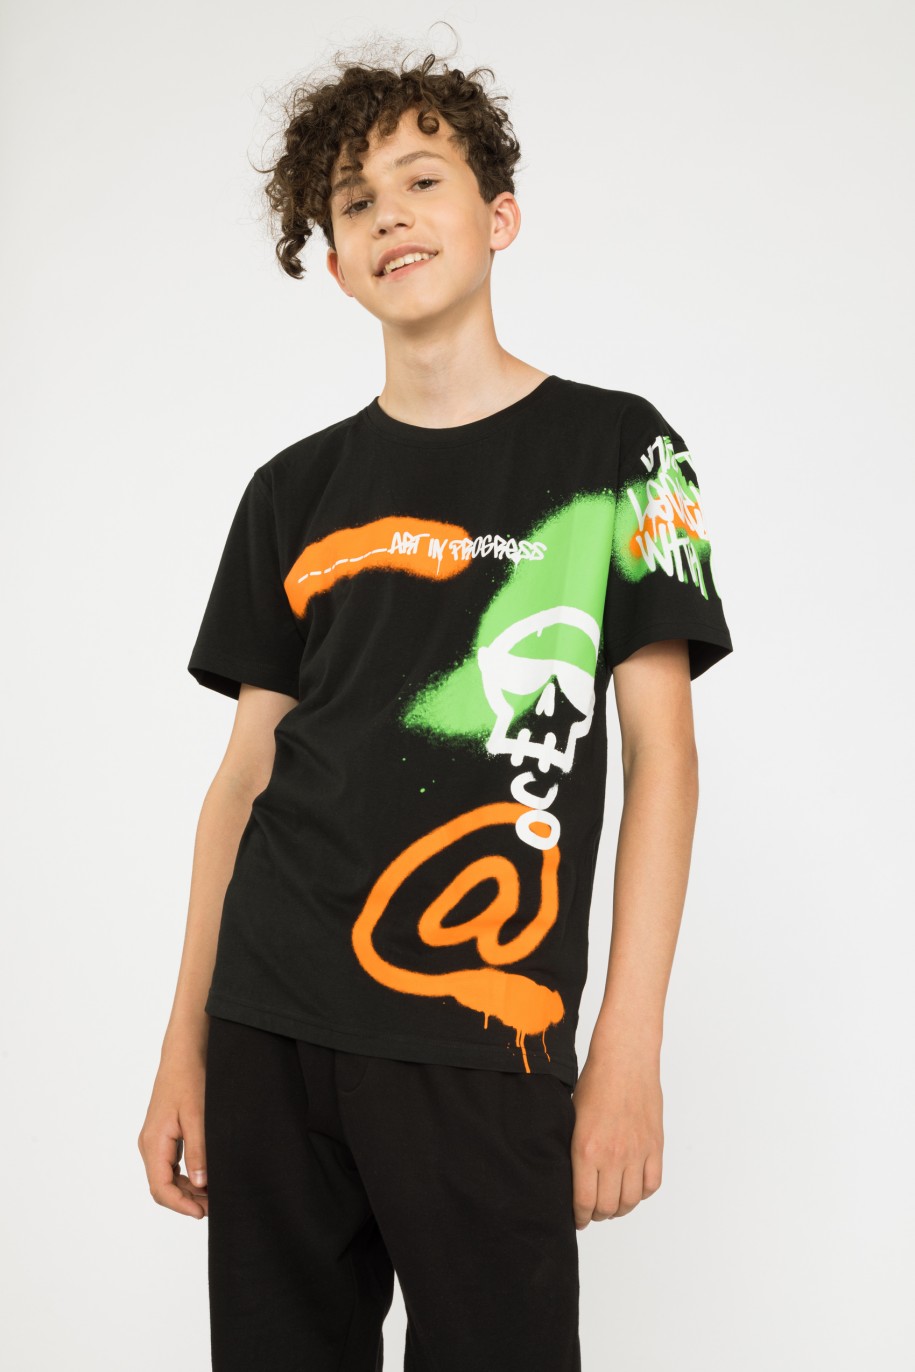 czarny t-shirt z akcentami greffiti dla chłopaka art in progress reporter young